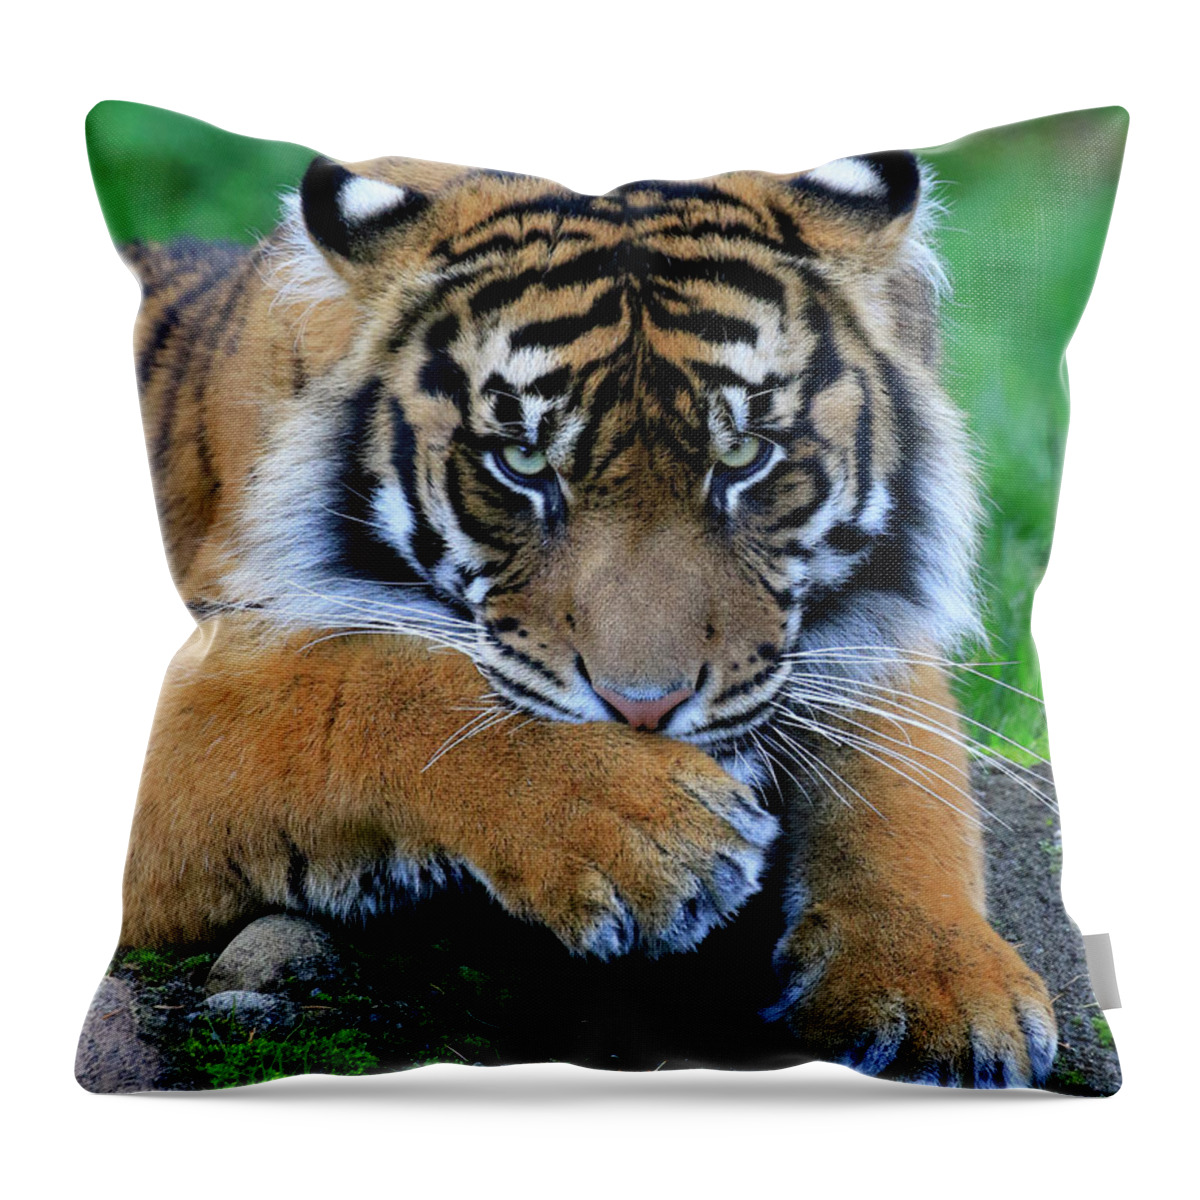 Tiger Throw Pillow featuring the photograph Hmmm by Steve McKinzie